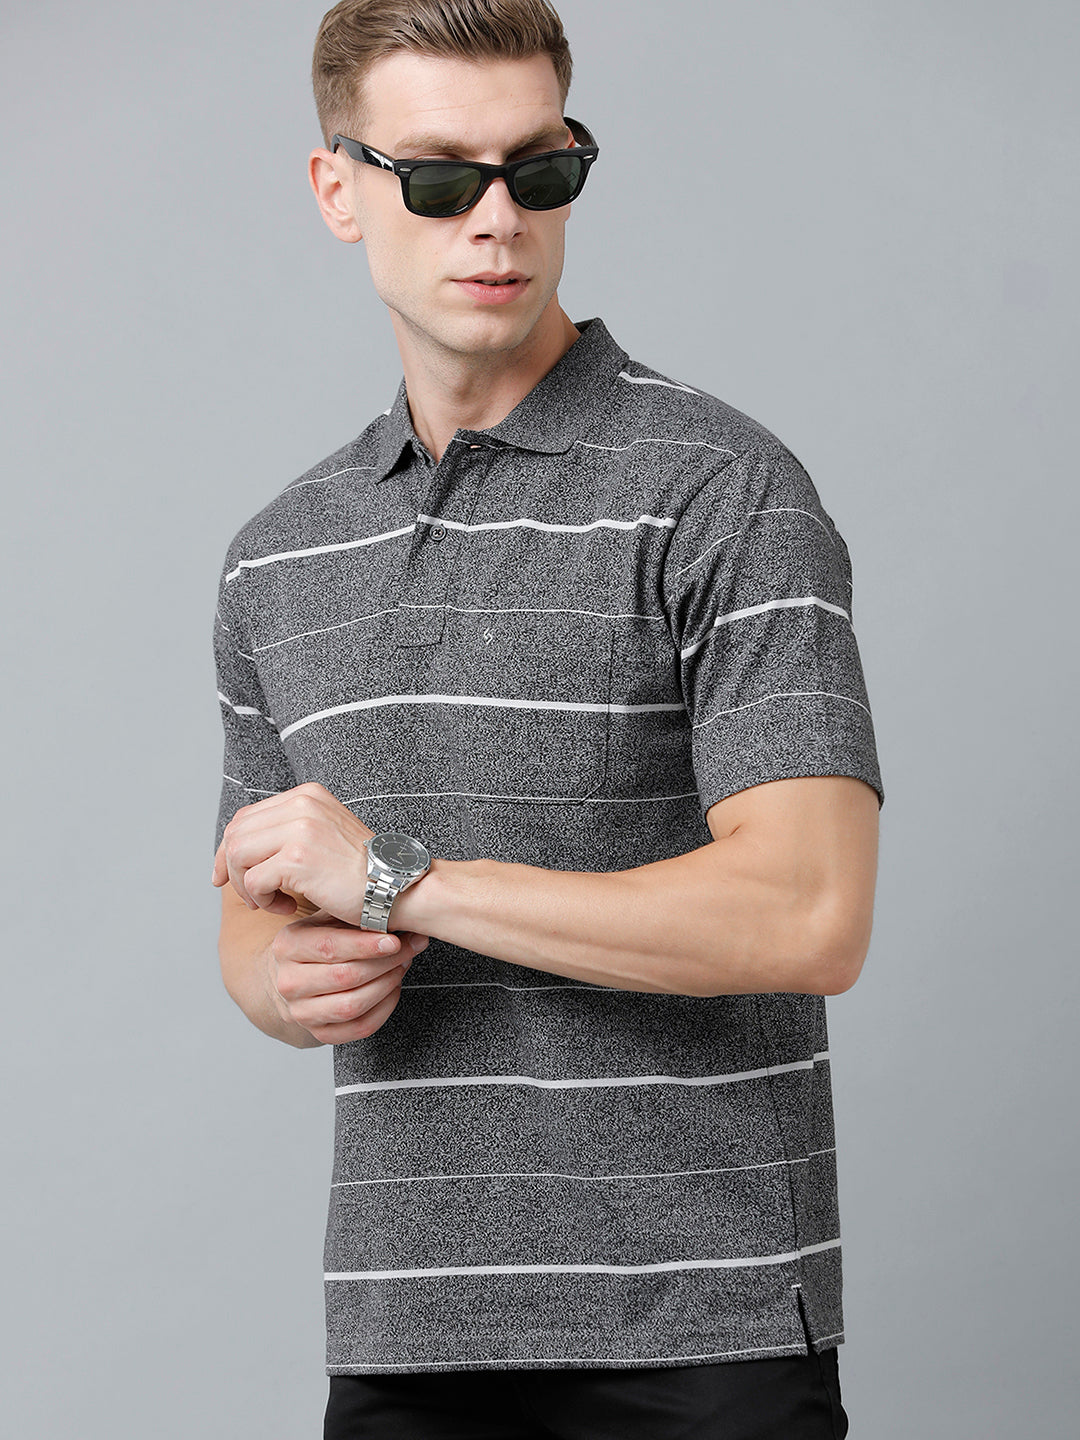 Classic Polo Men's Cotton Blend Half Sleeve Striped Authentic Fit Polo Neck Dark Grey Color T-Shirt | Avon - 529 A